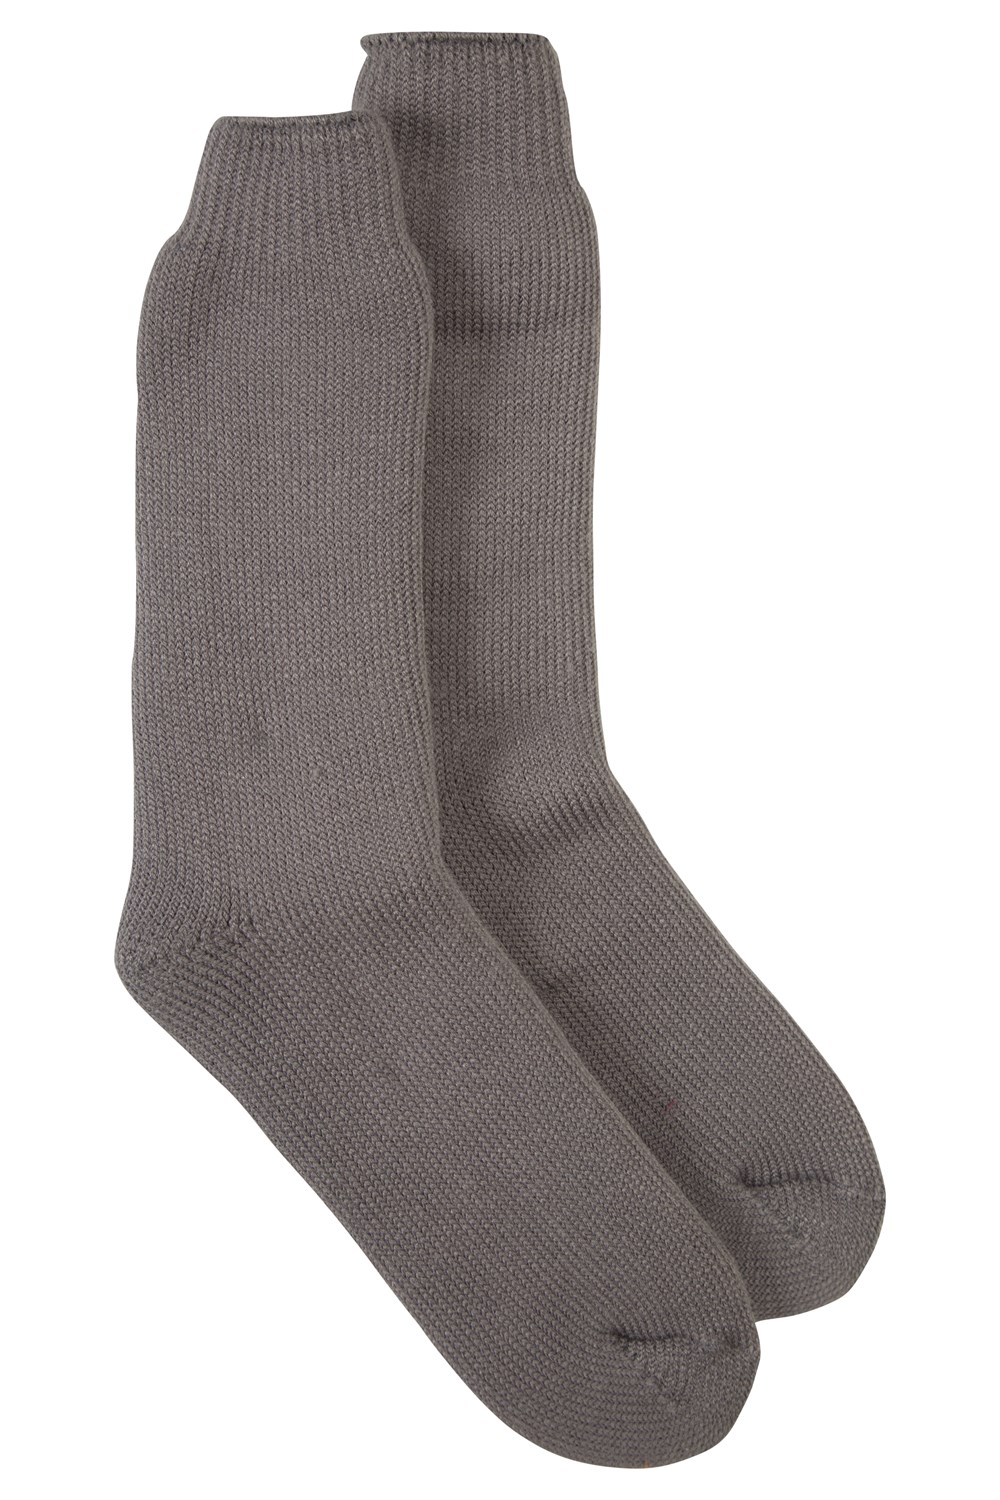 Mountain Warehouse Mens Thermal Socks | eBay